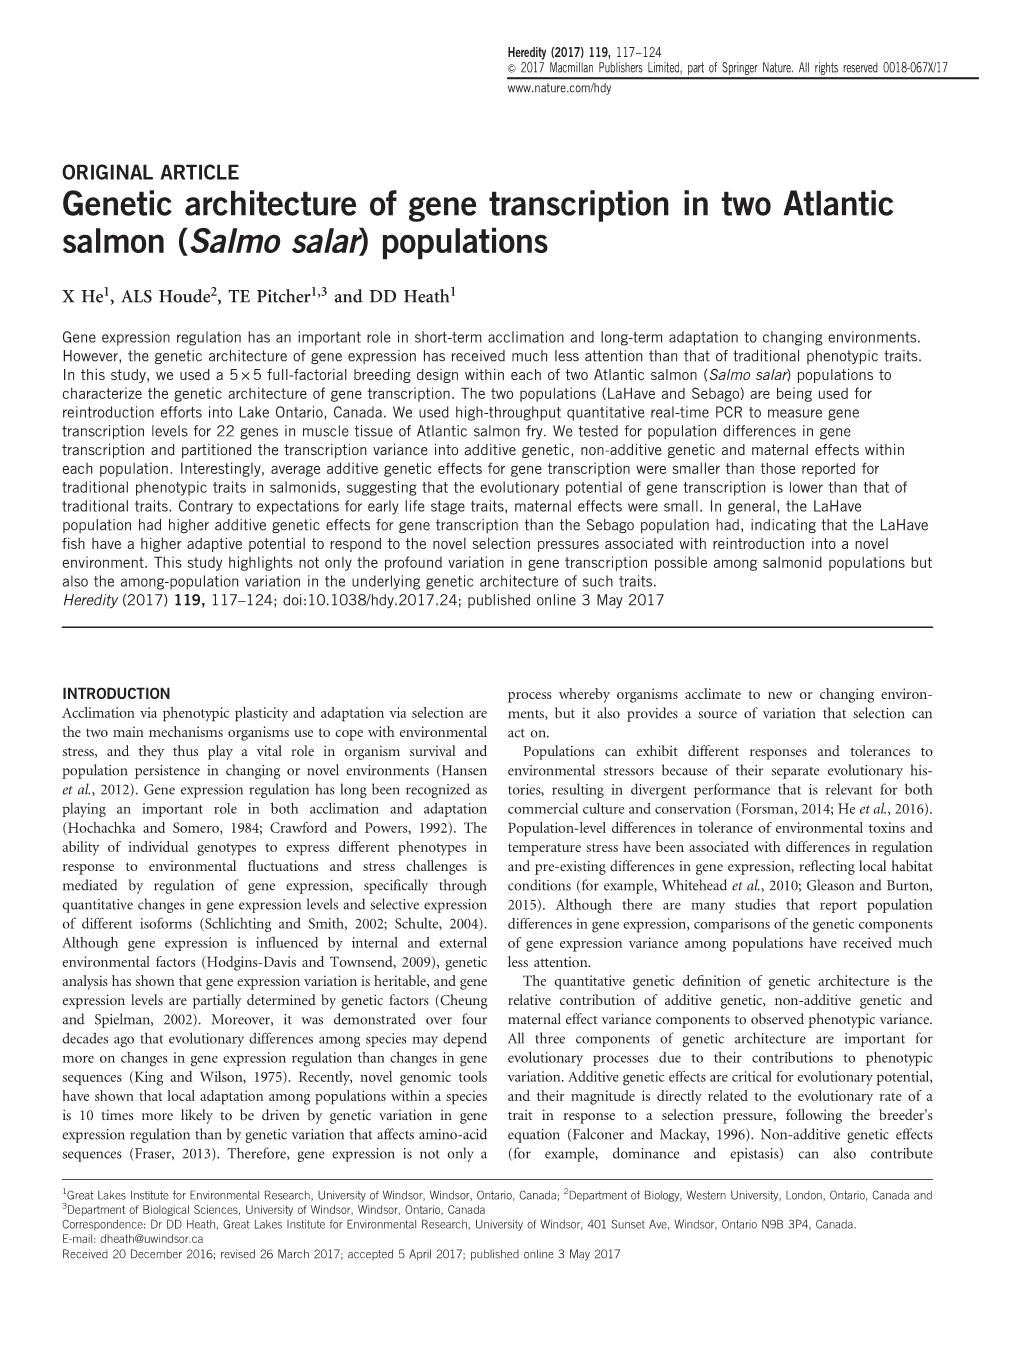 Genetic Architecture of Gene Transcription in Two Atlantic Salmon (Salmo Salar) Populations